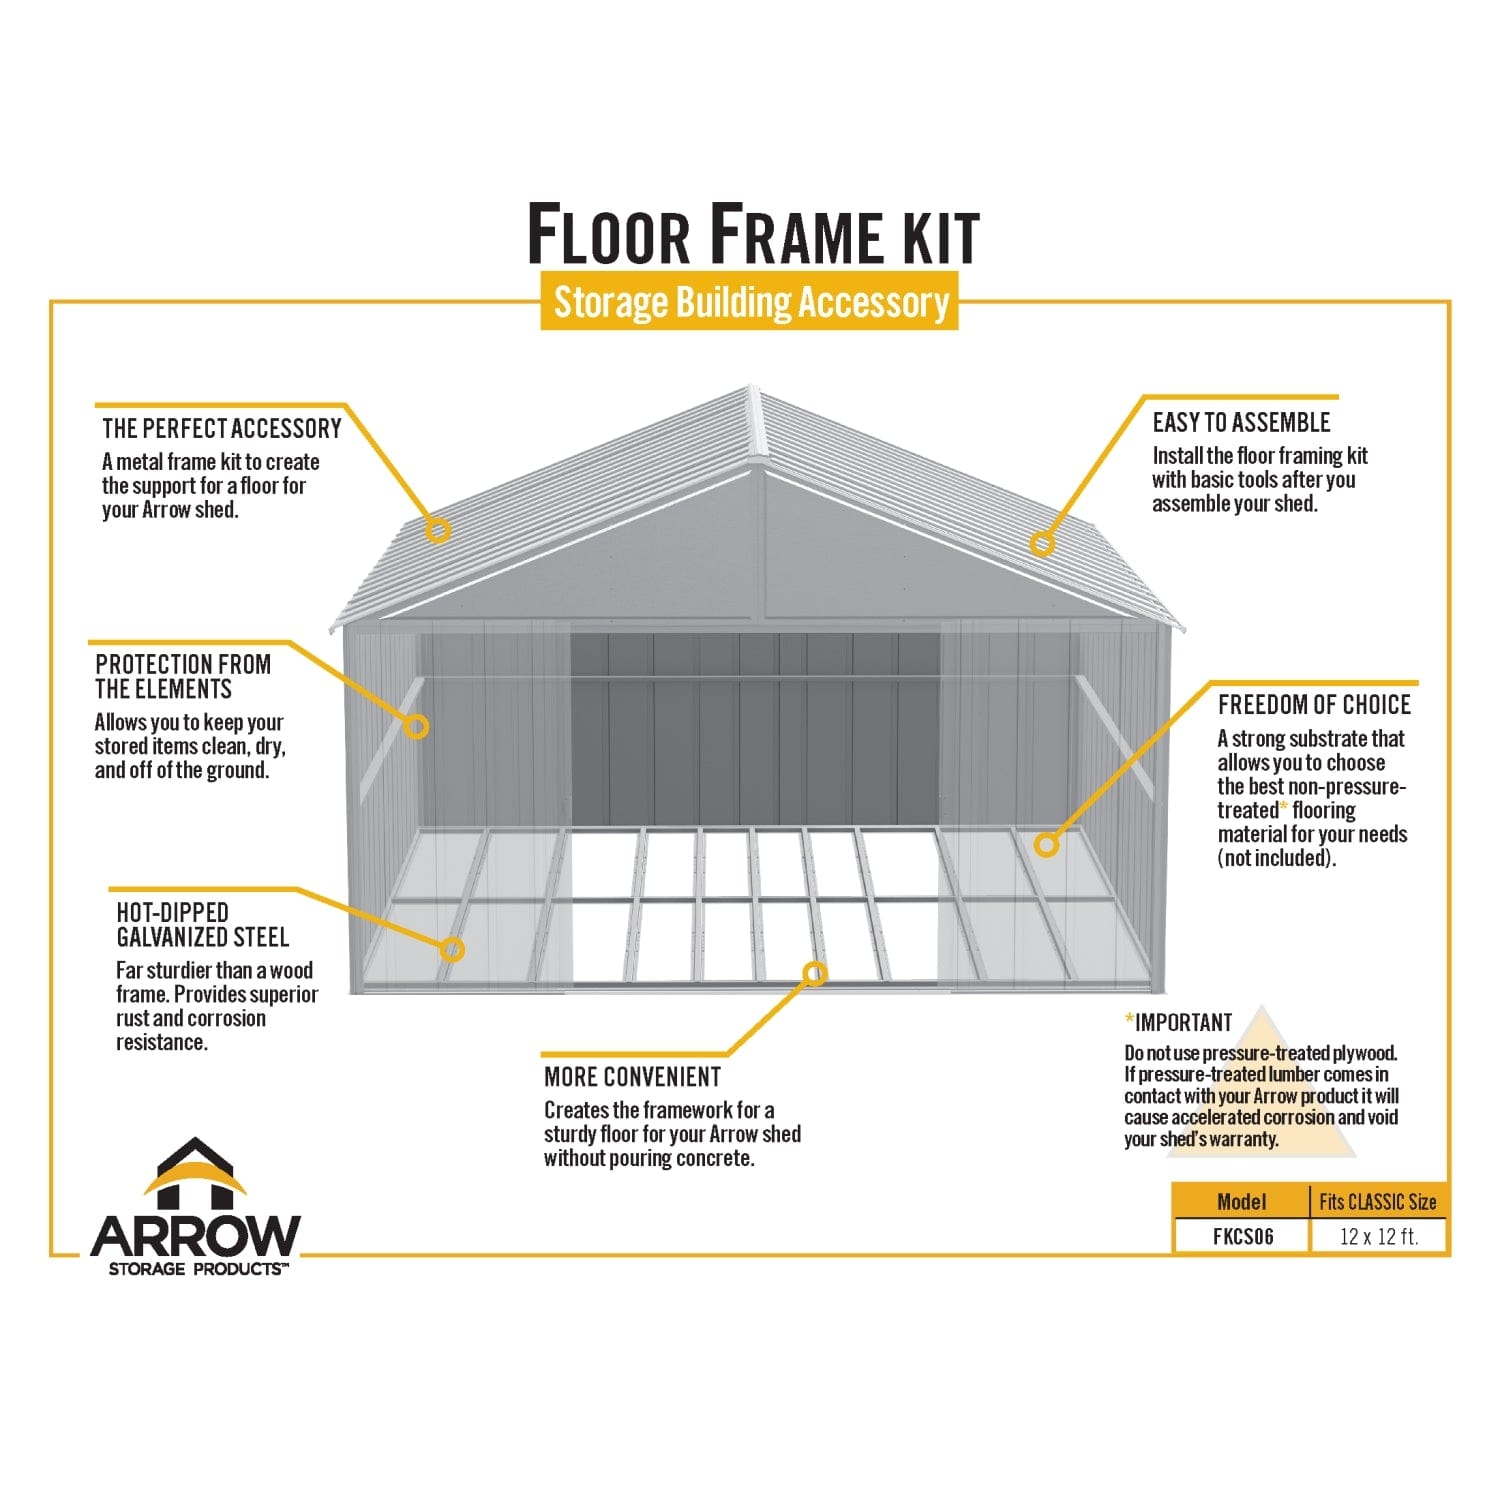 Arrow Shed Accessories Arrow | Floor Frame Kit for Arrow Classic Shed 12x12 ft. FKCS06